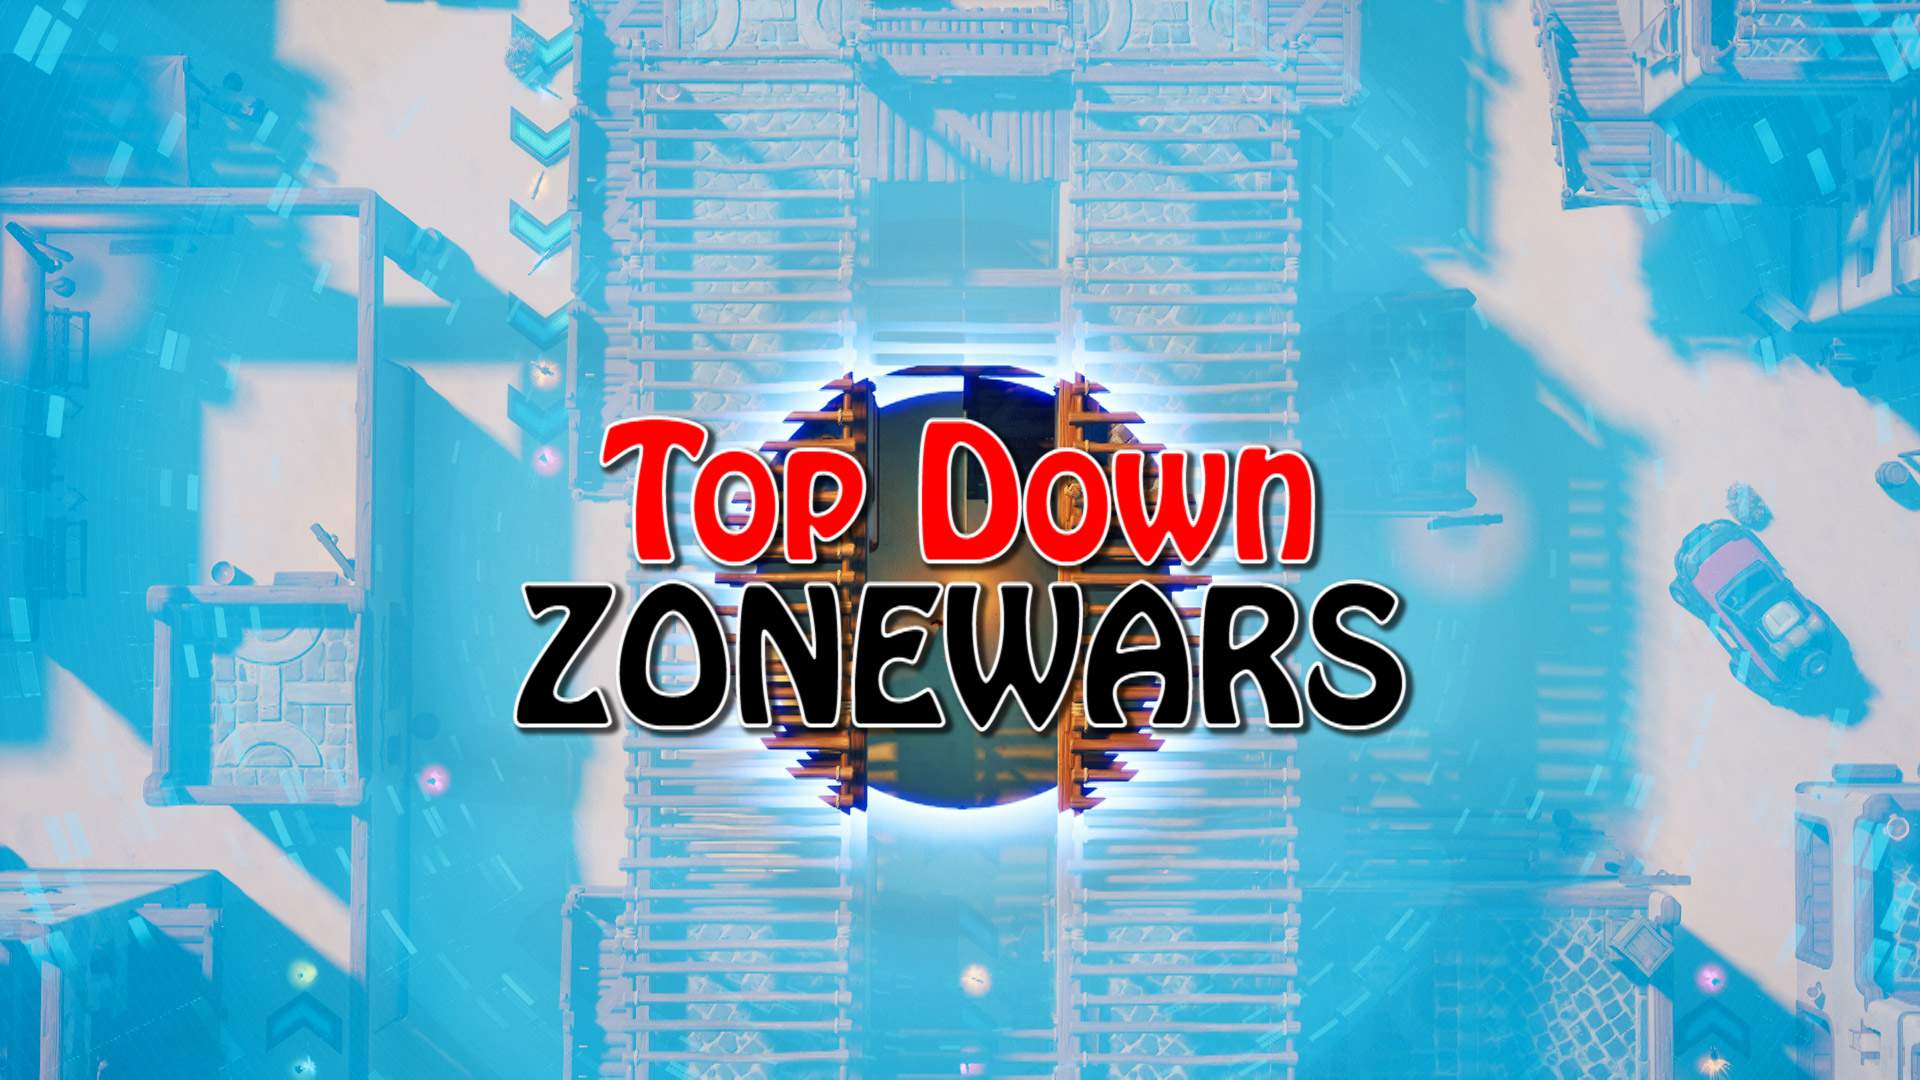 TOWN ZONE WARS - Fortnite Creative Map Code - Dropnite